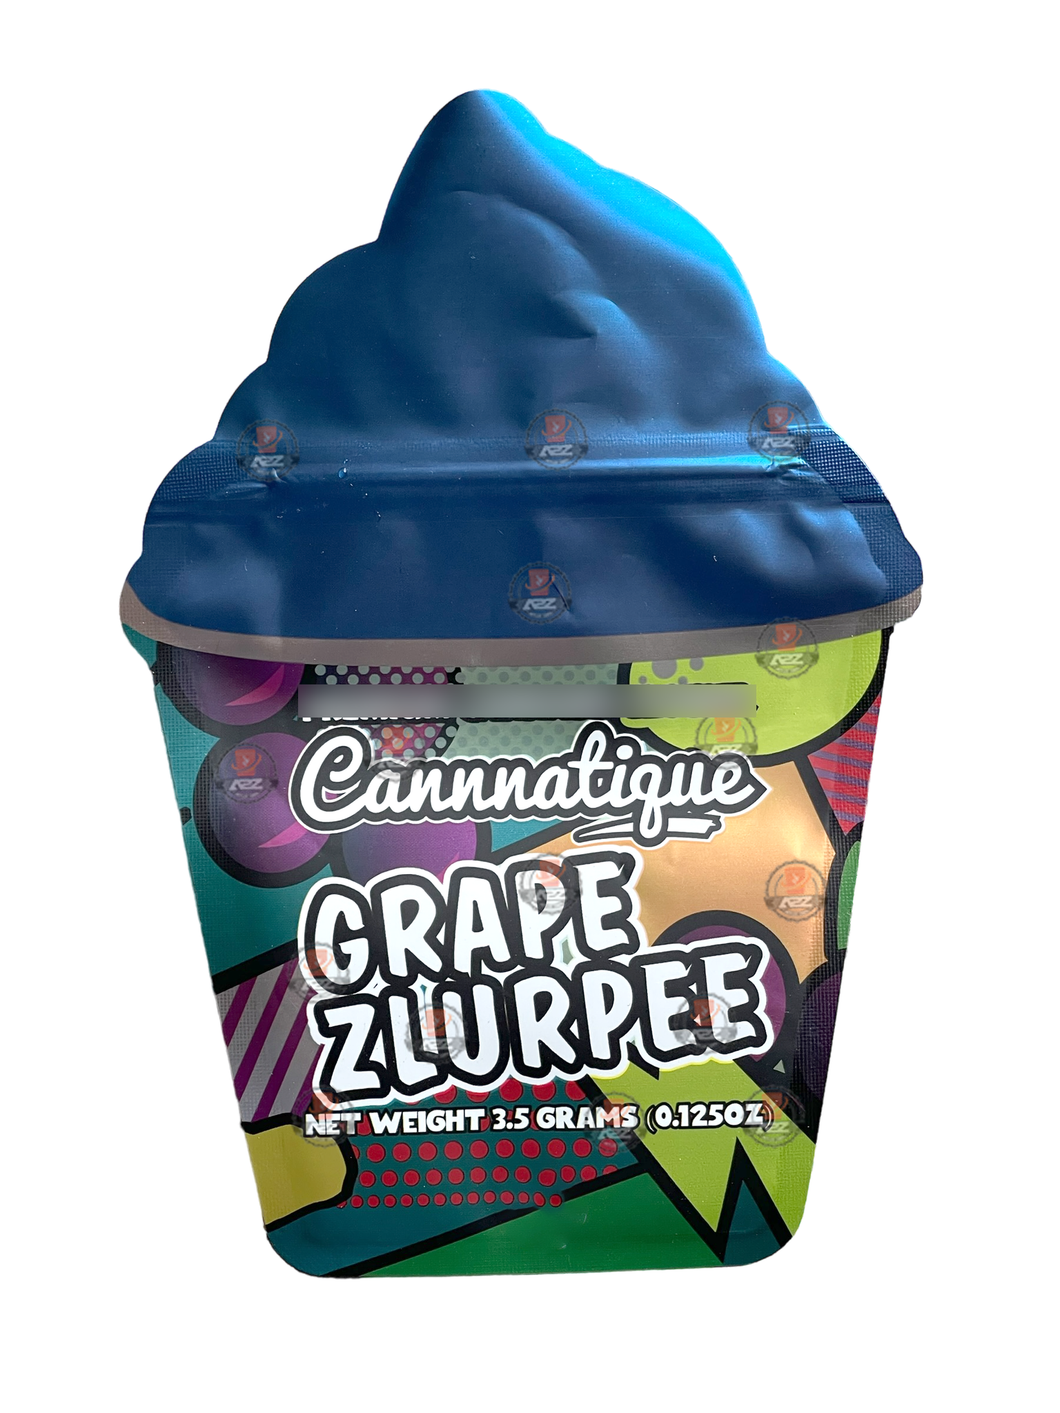 Cannatique Grape Zlurpee Mylar Bag 3.5g Holographic Cut Out